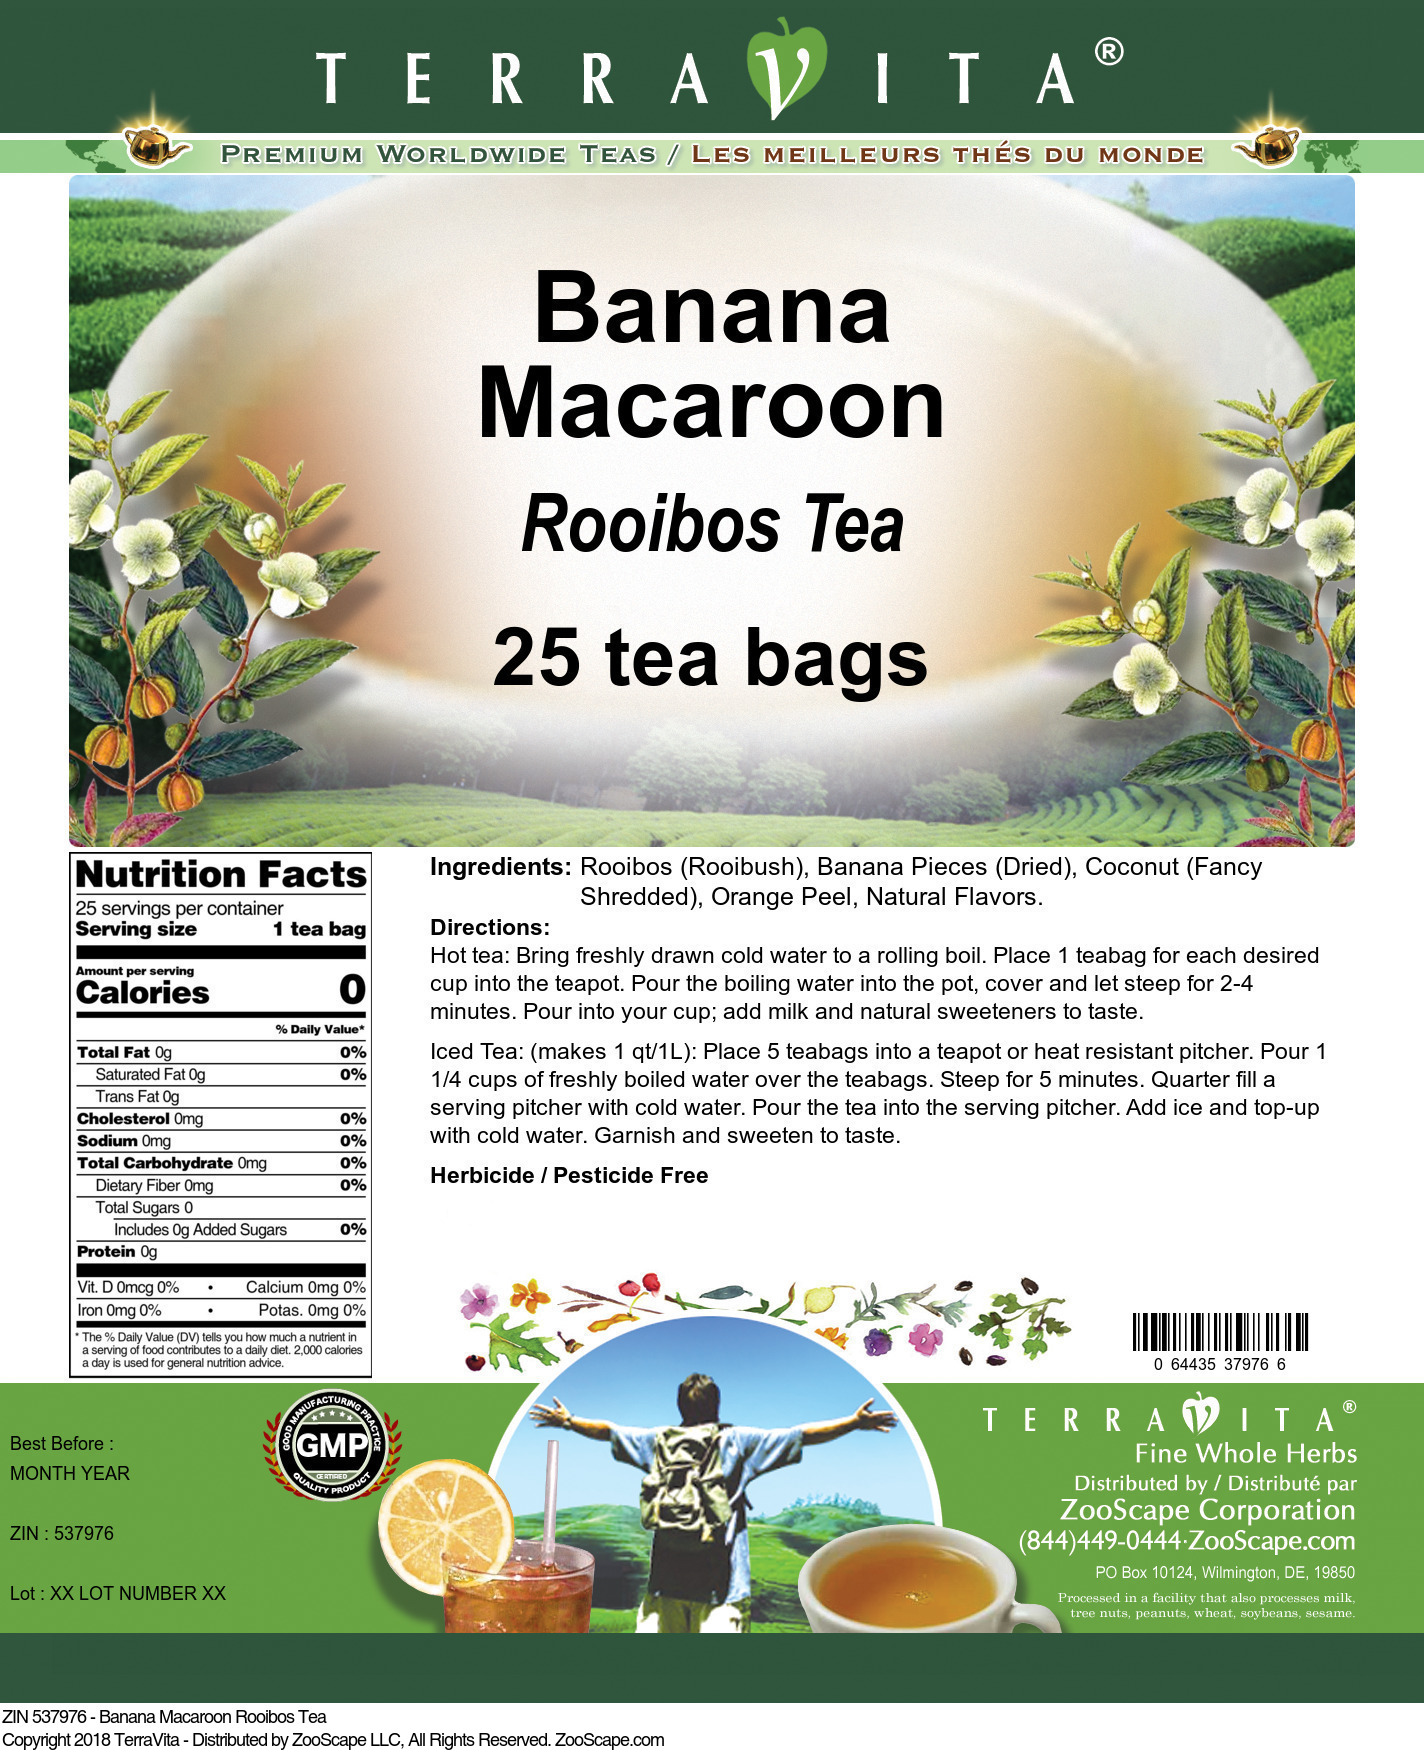 Banana Macaroon Rooibos Tea - Label